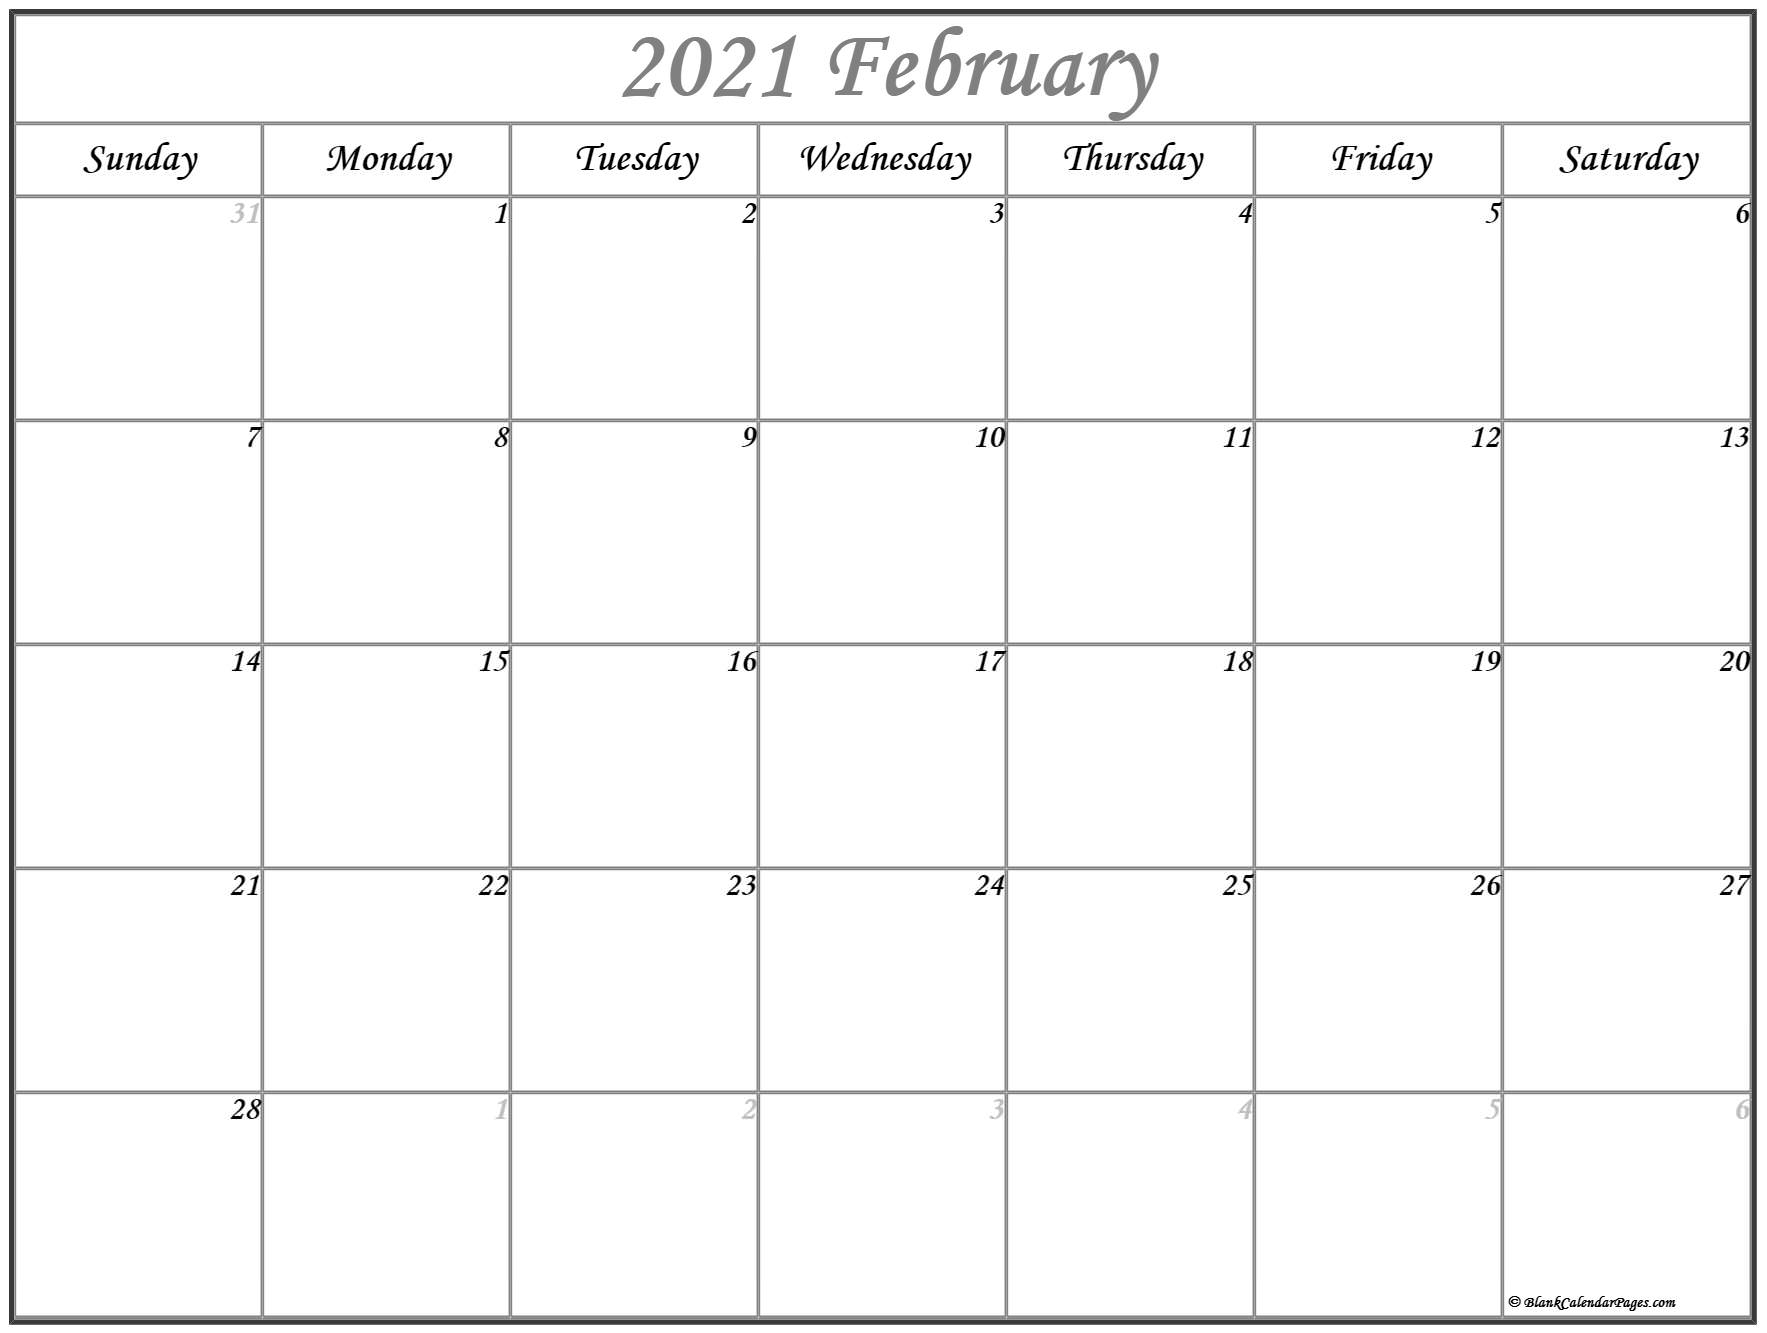 February 2021 Calendar | Free Printable Monthly Calendars